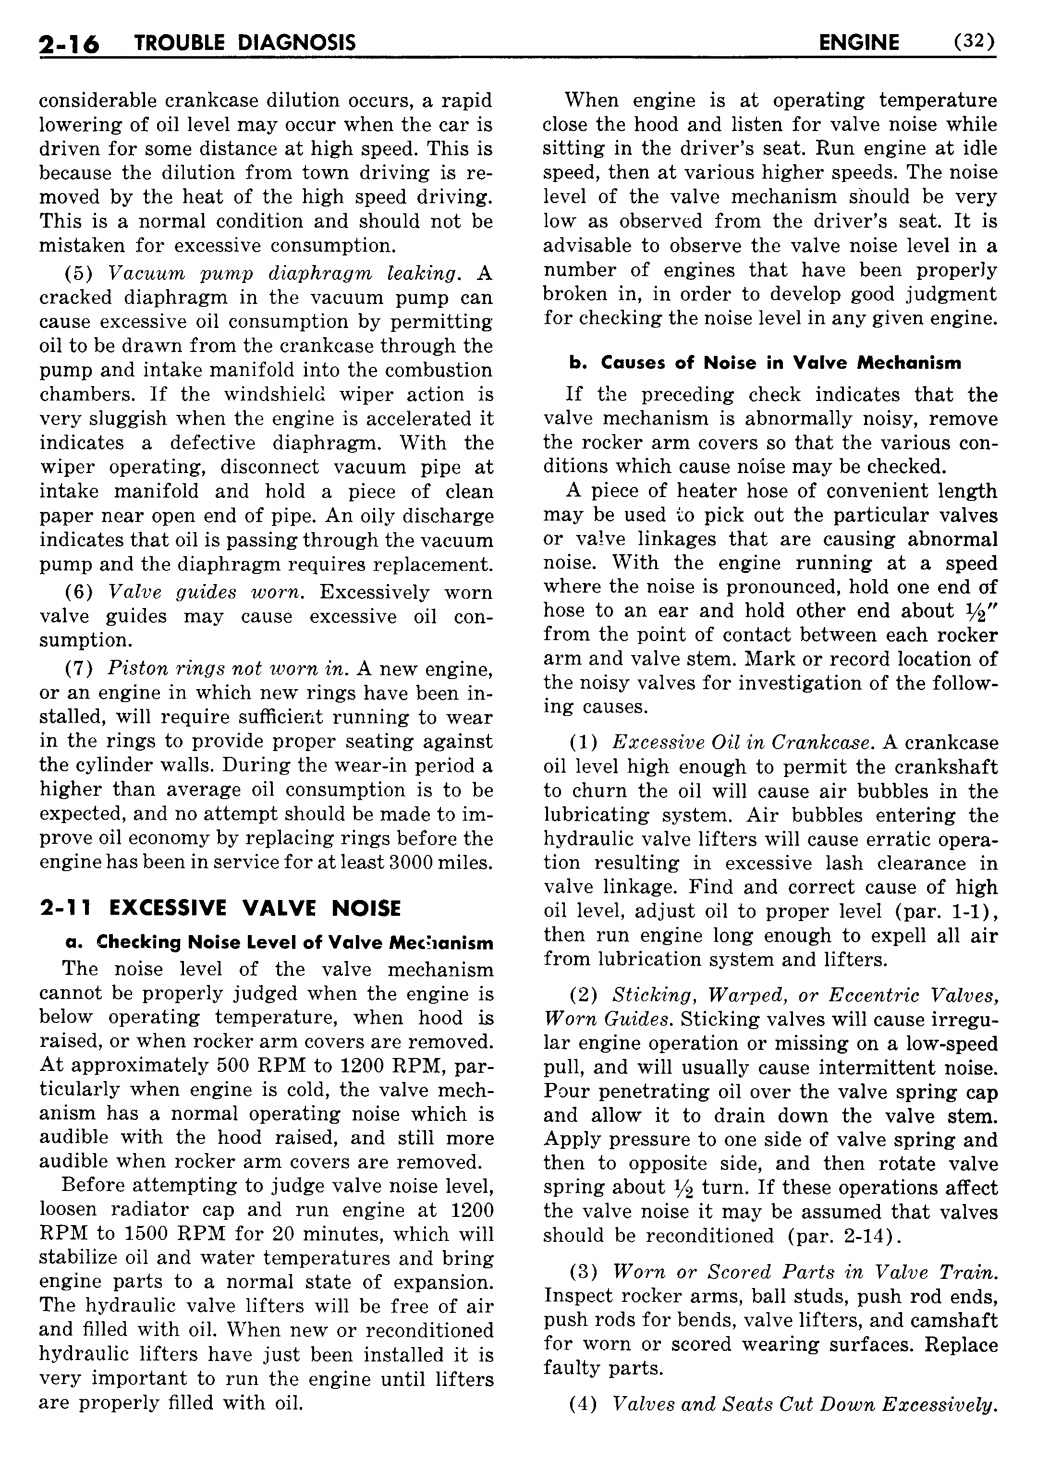 n_03 1955 Buick Shop Manual - Engine-016-016.jpg